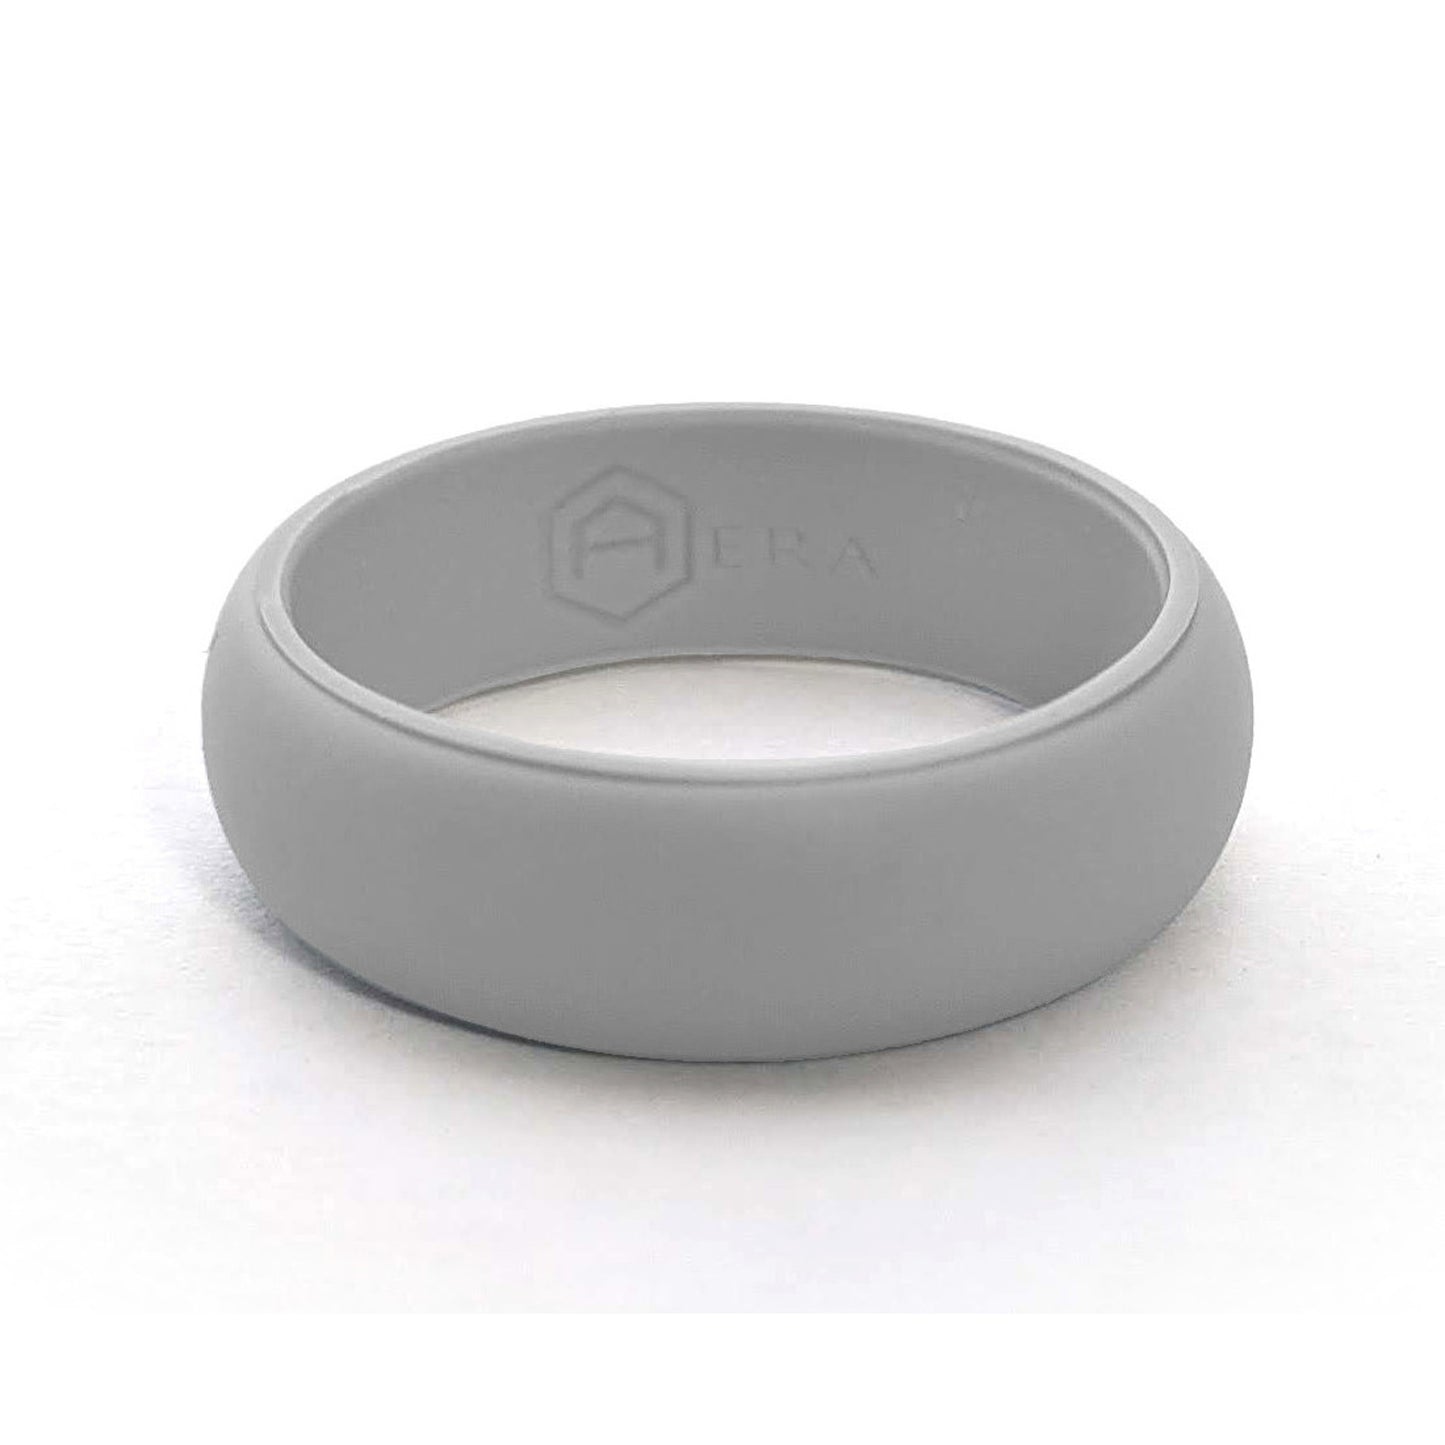 Women's Silicone Wedding Ring